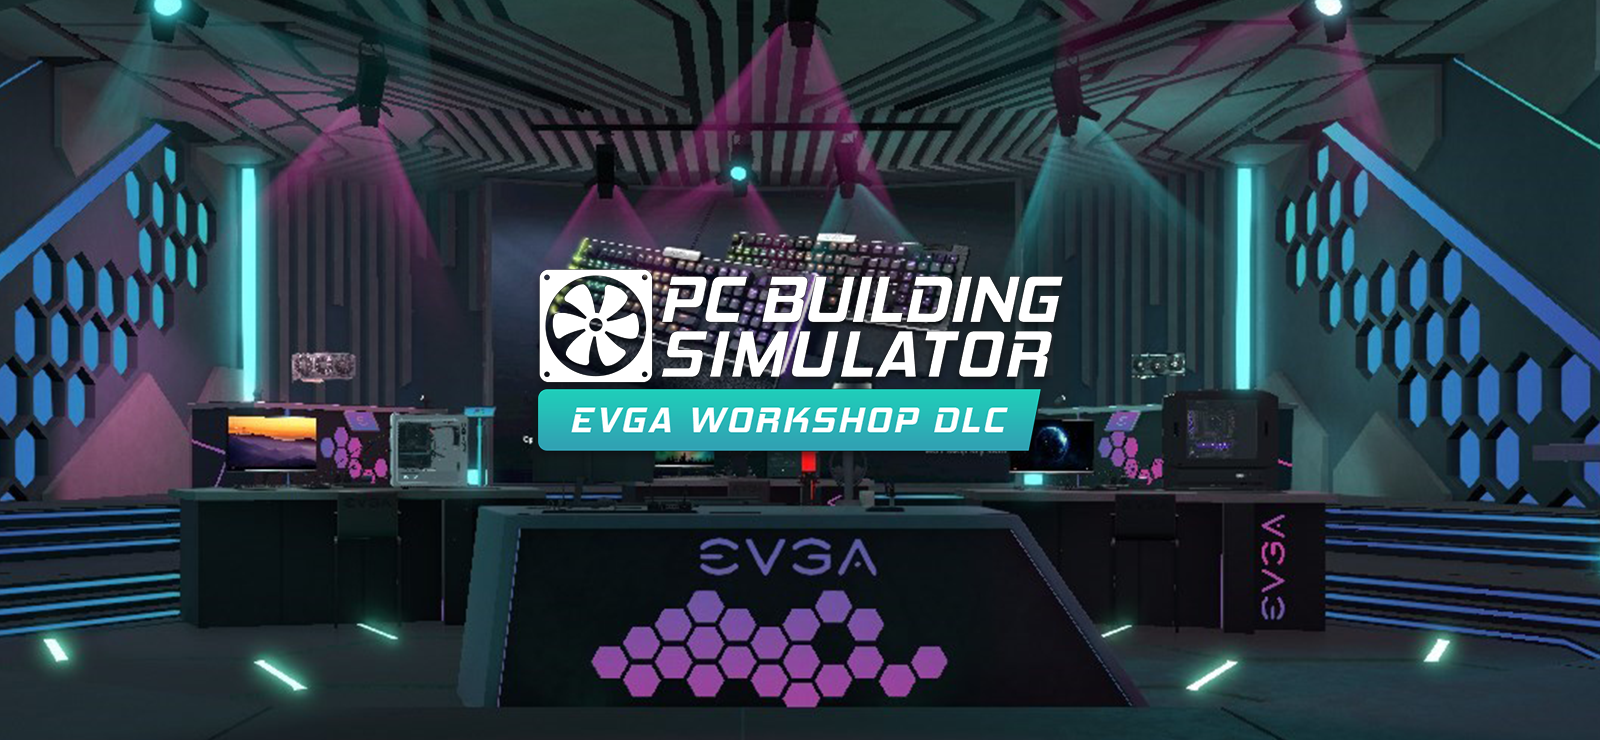 PC Building Simulator - EVGA Workshop